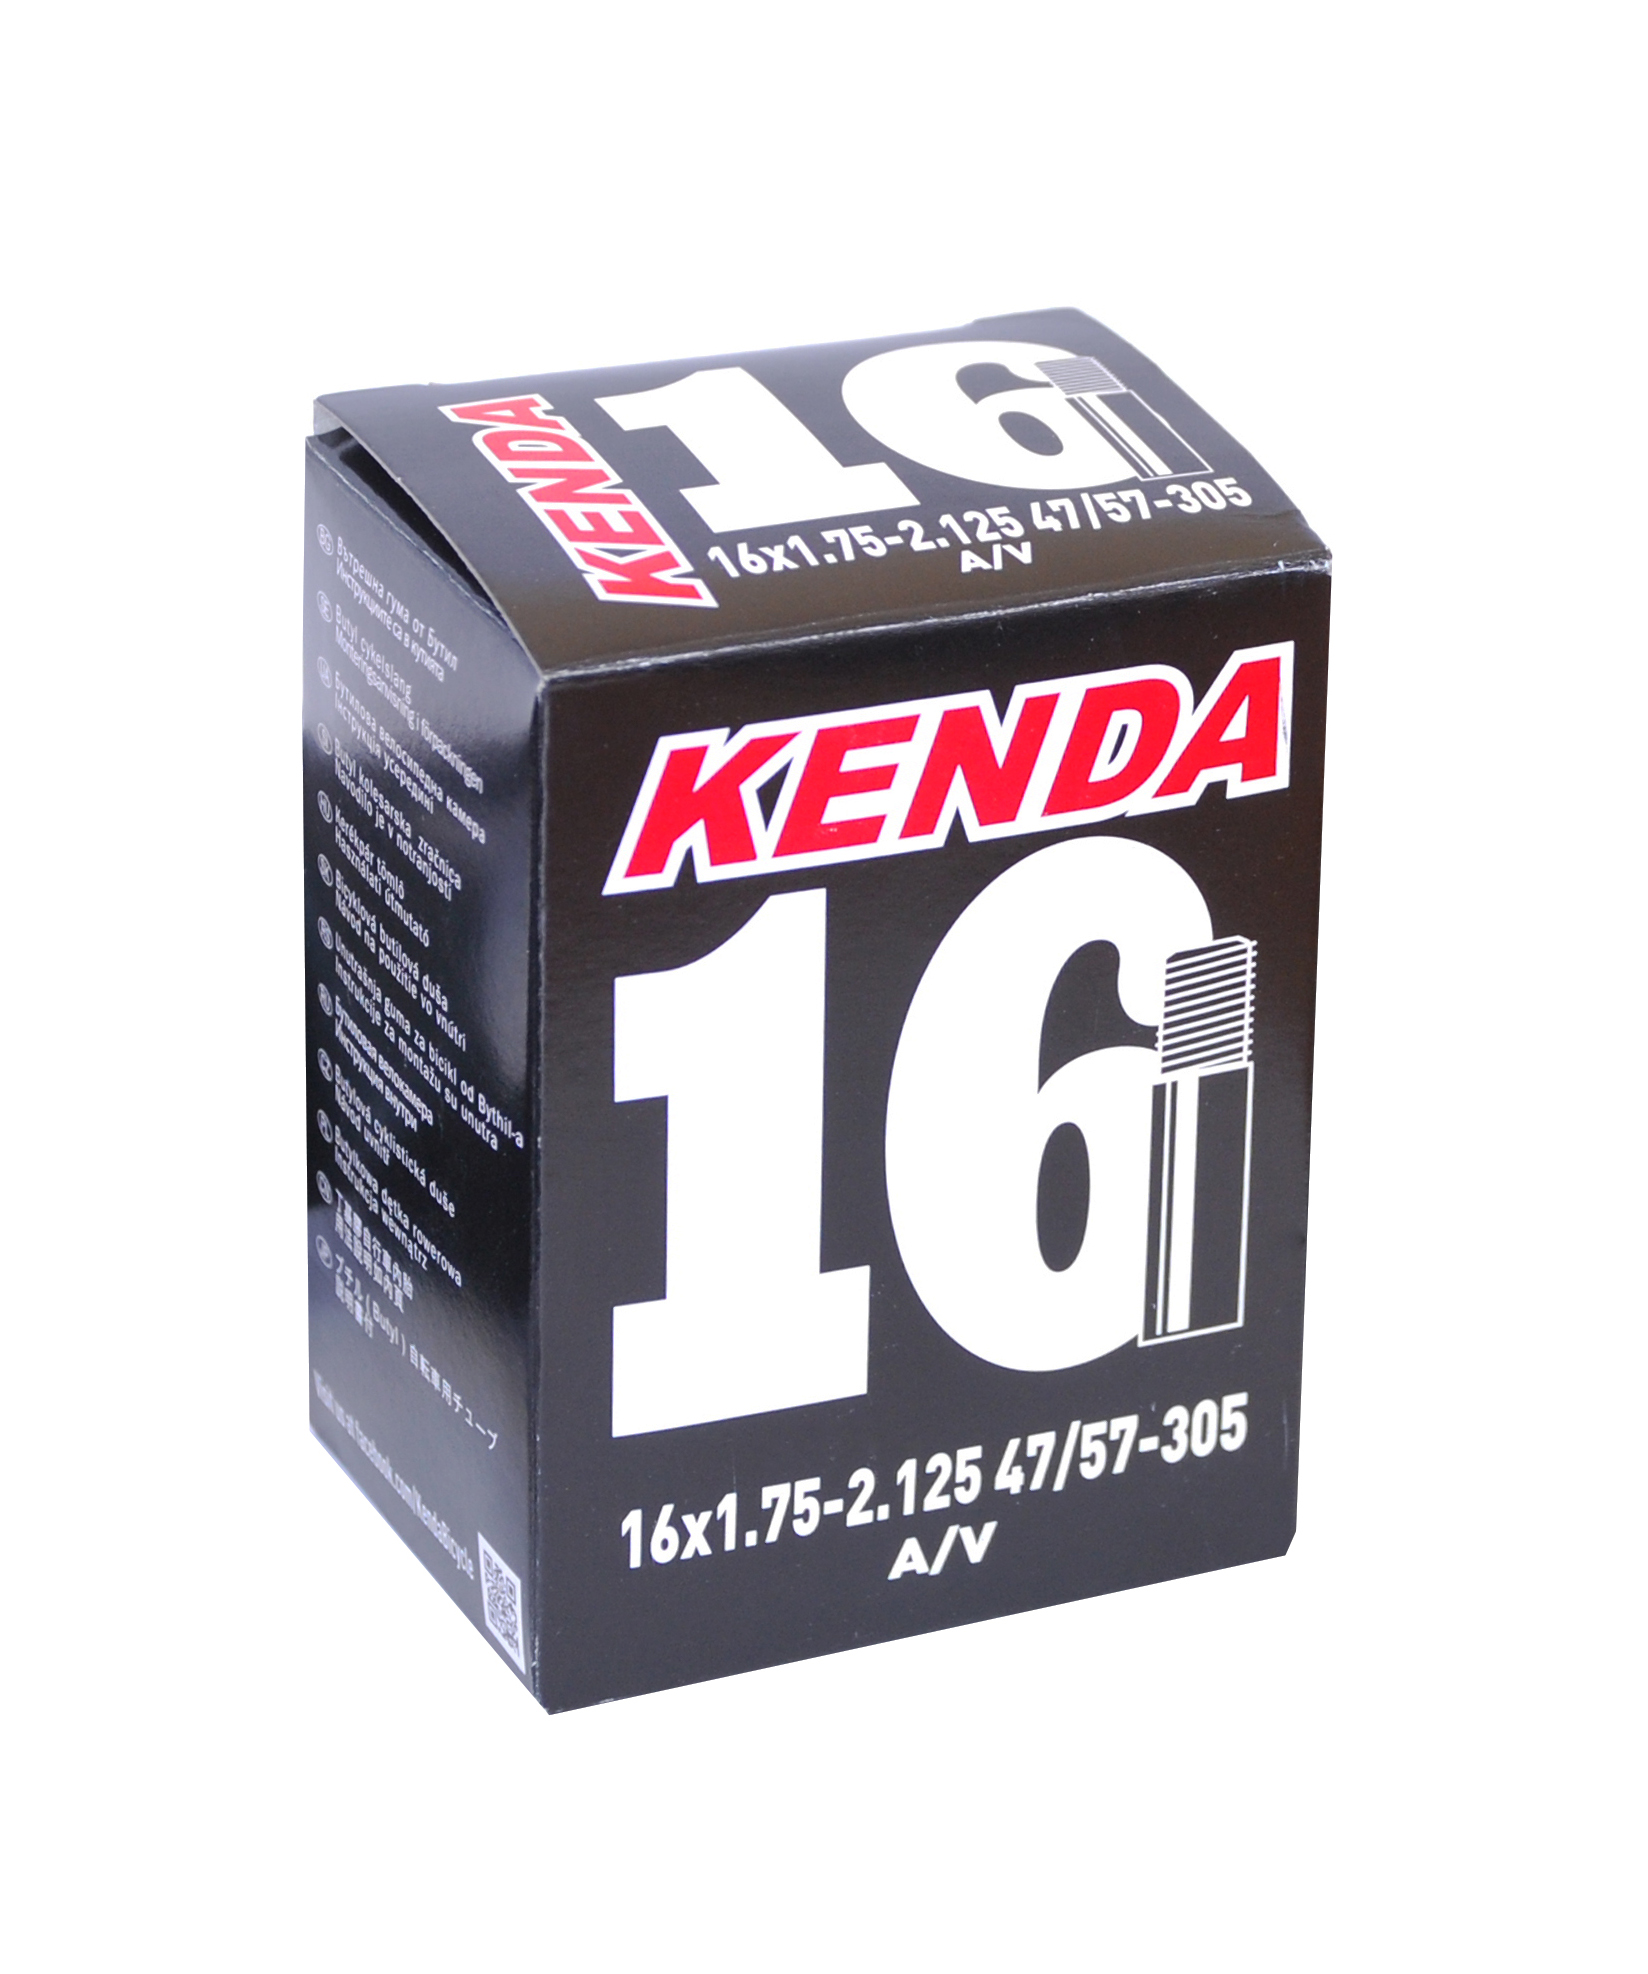 Камера KENDA 16" х 1.75-2.125", 47/57-305 авто 